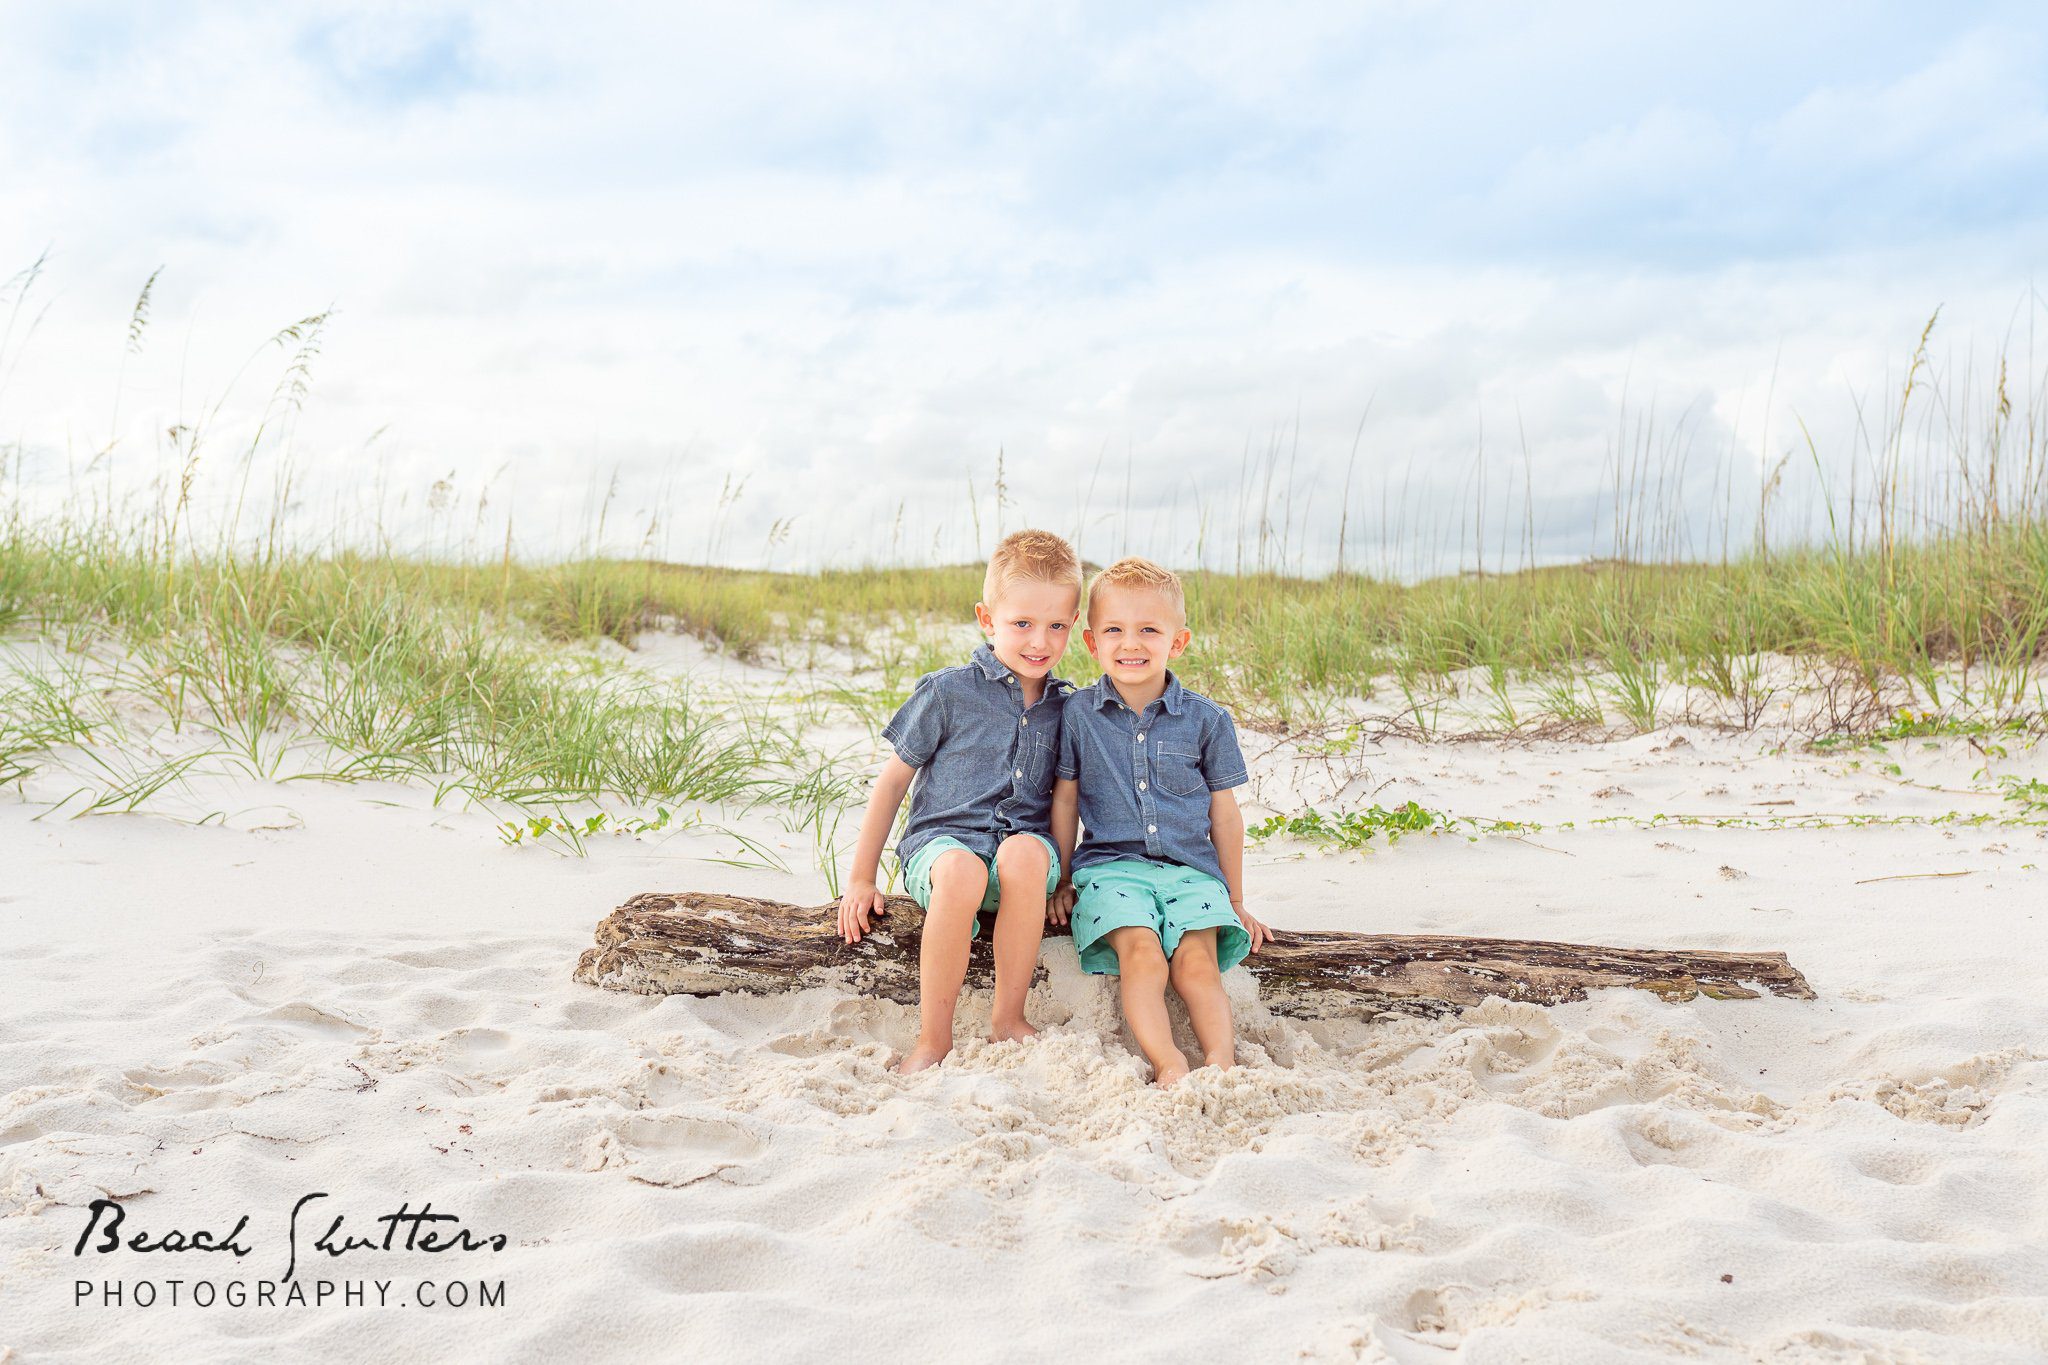 beach portraits by Beach Shutters Photography